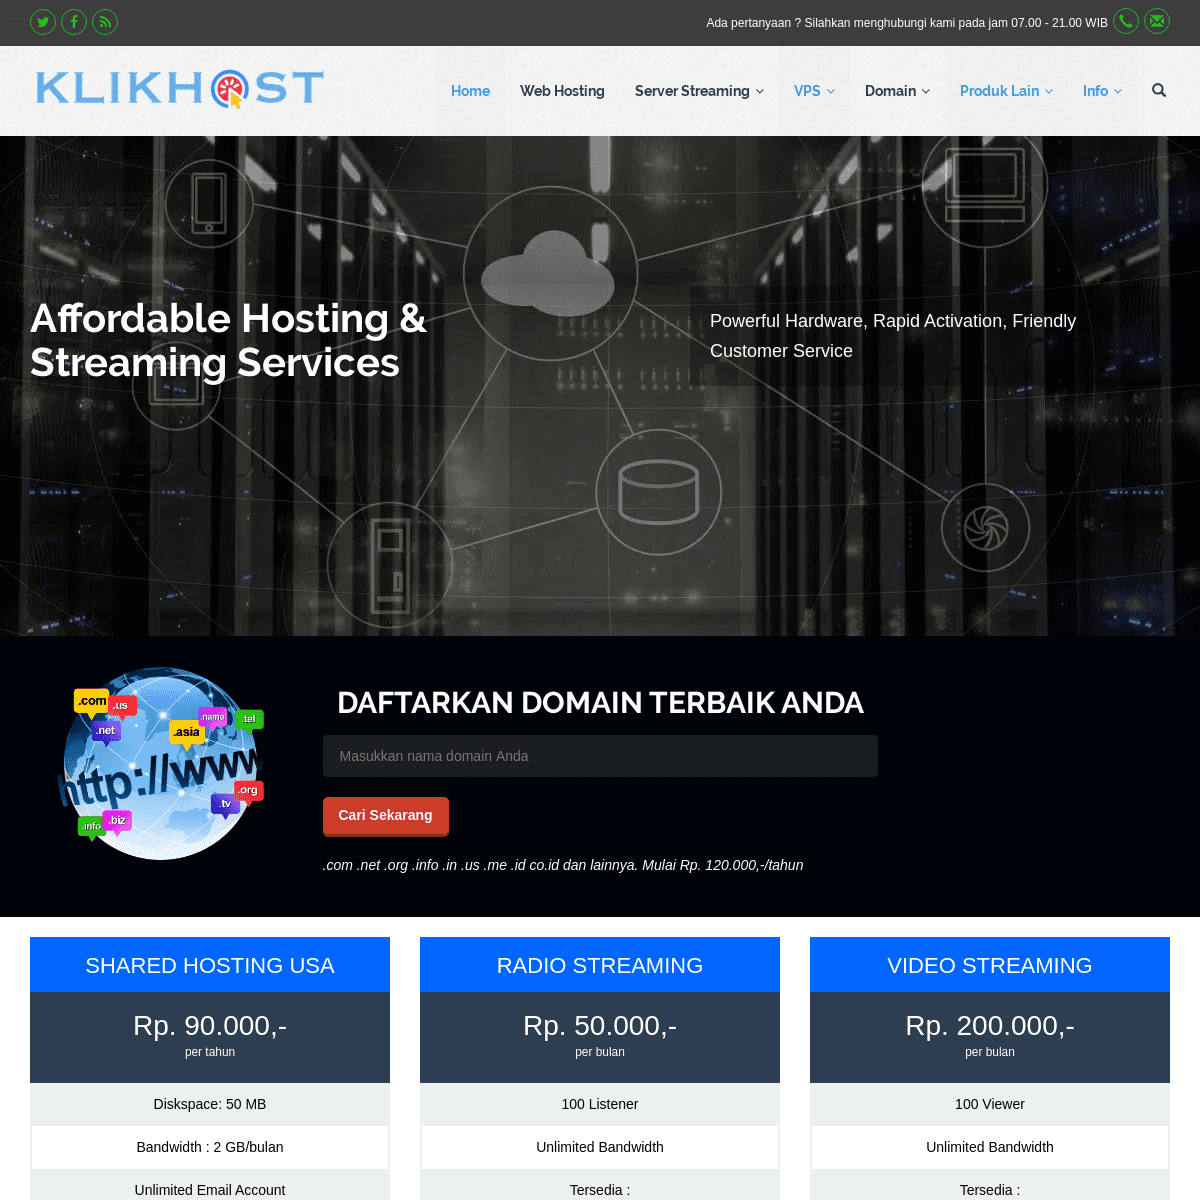 A complete backup of klikhost.com